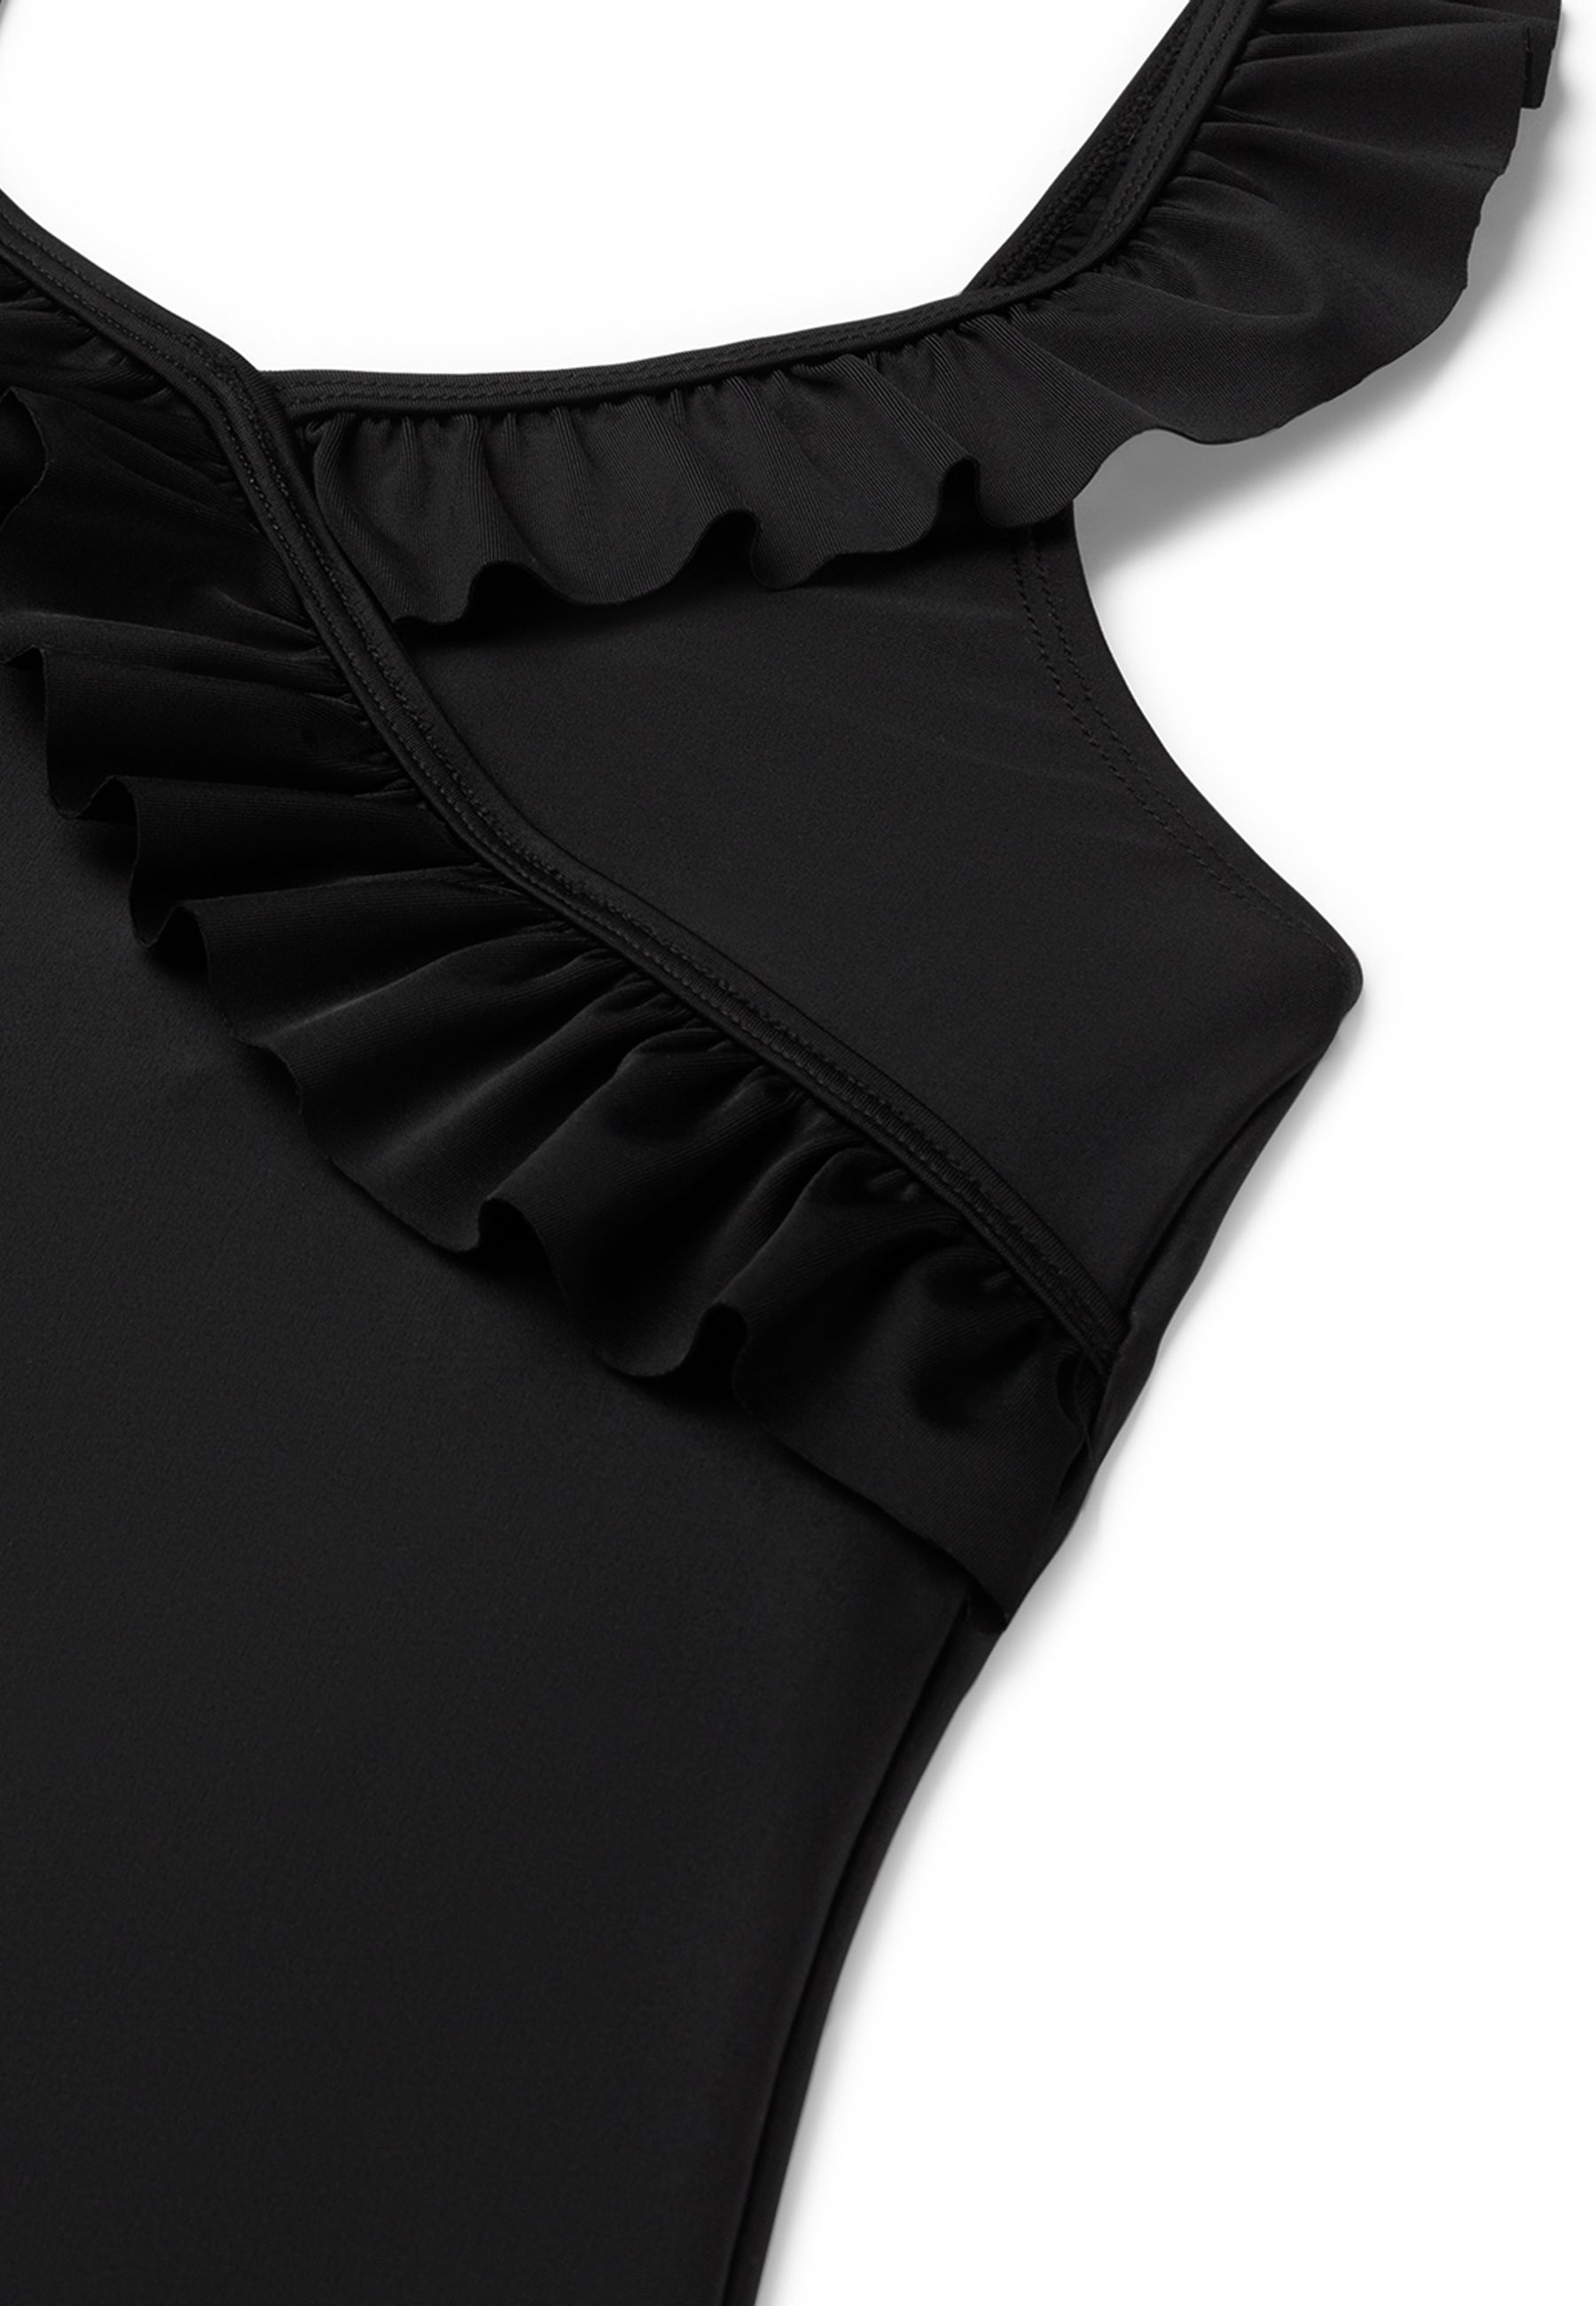 Meisjes ROSA swimsuit van Shiwi in de kleur black in maat 134-140.